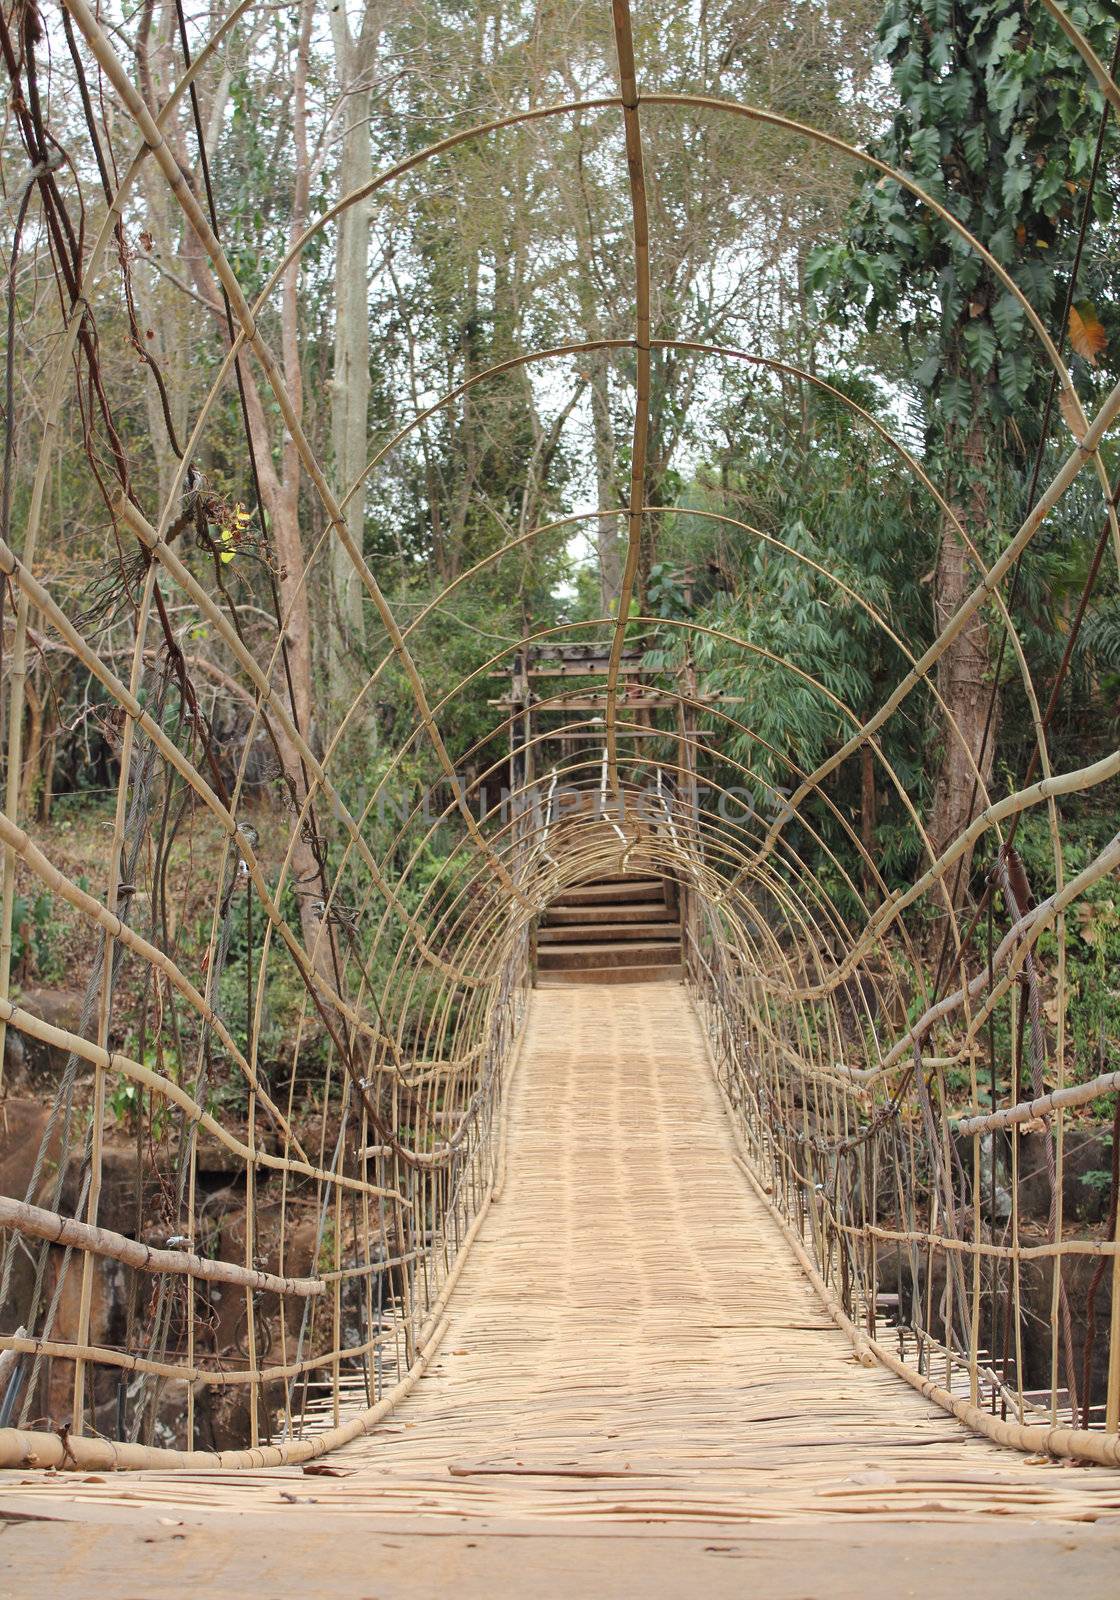 Suspension bamboo bridge by olovedog